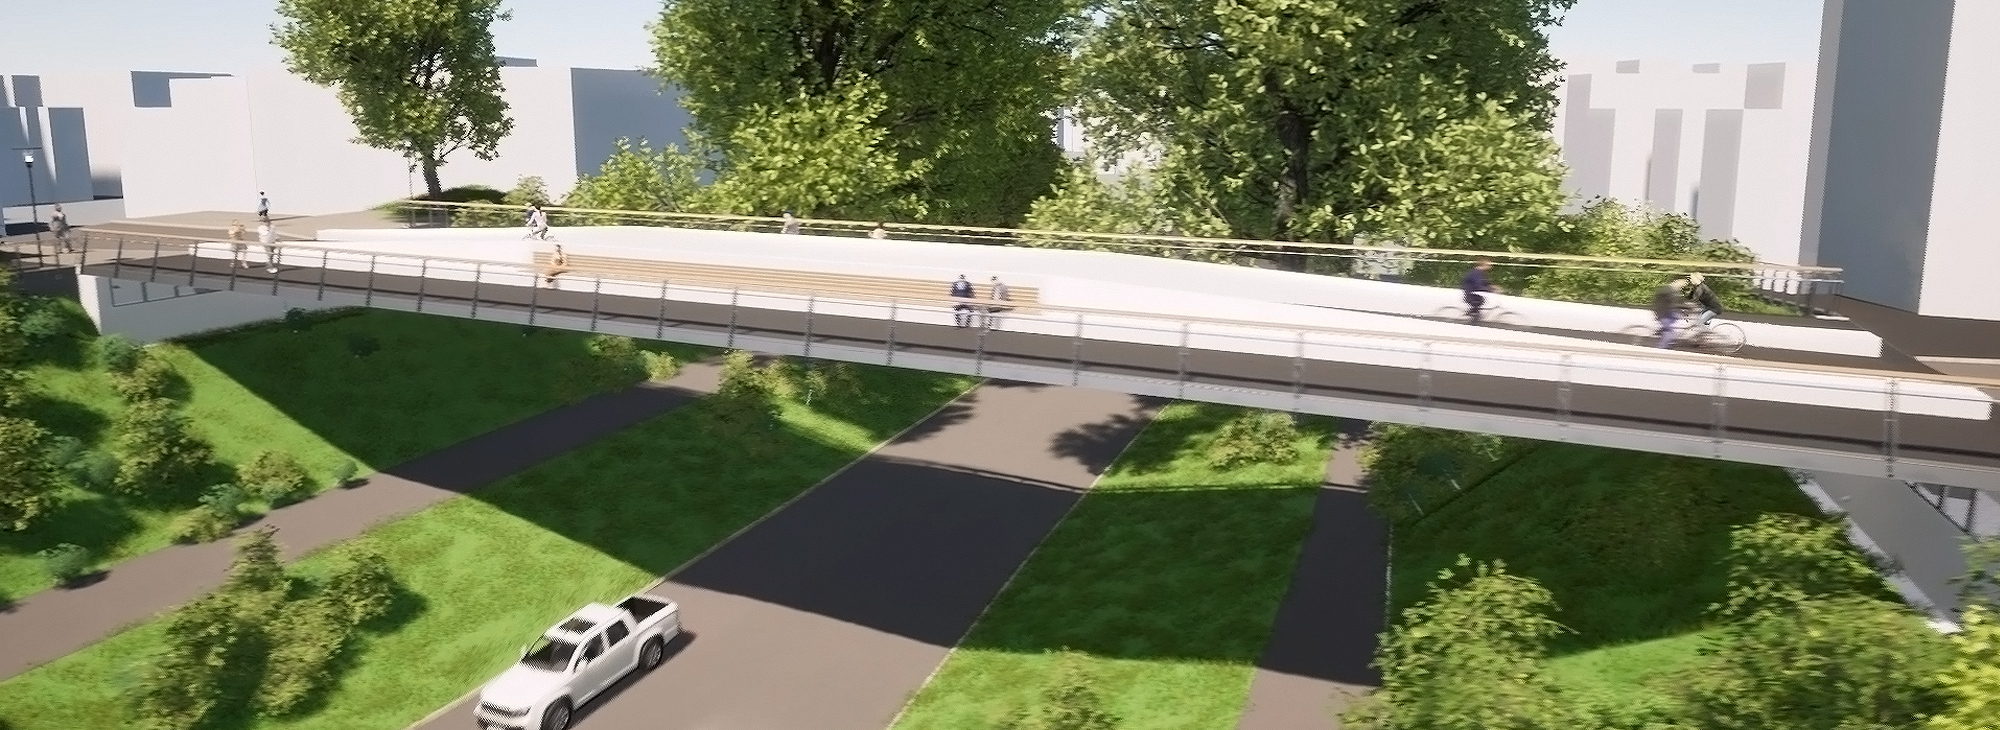 GRBV | Neubau der Fuß- und Radwegbrücke in Mönchengladbach